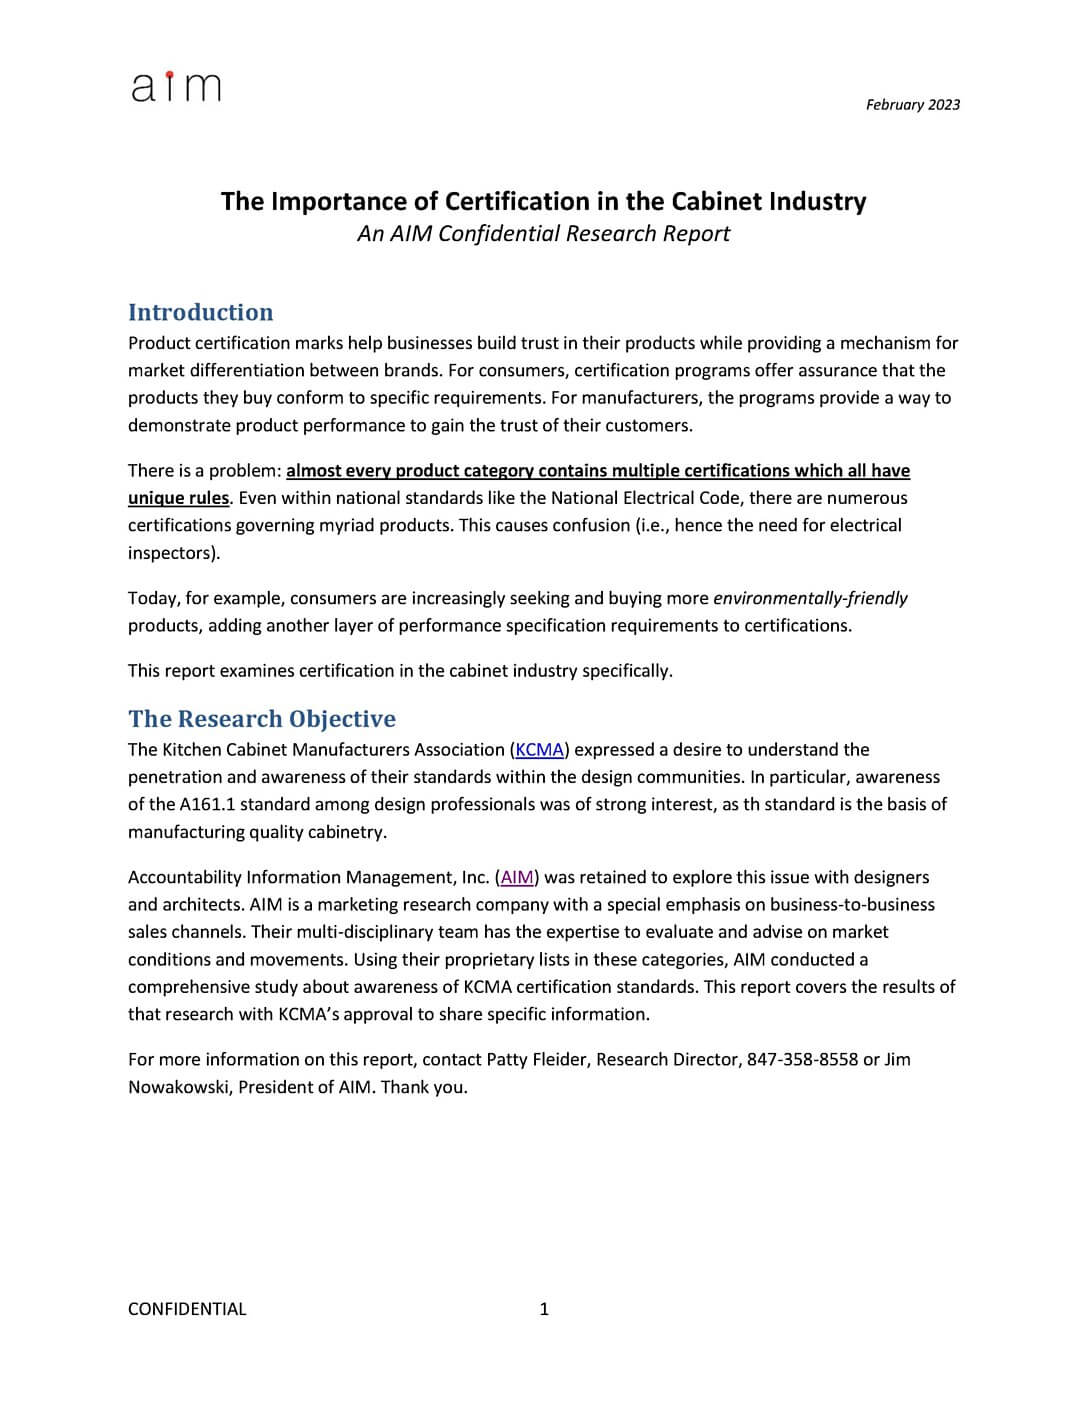 kcm7118 kcma report on certifications.pdf